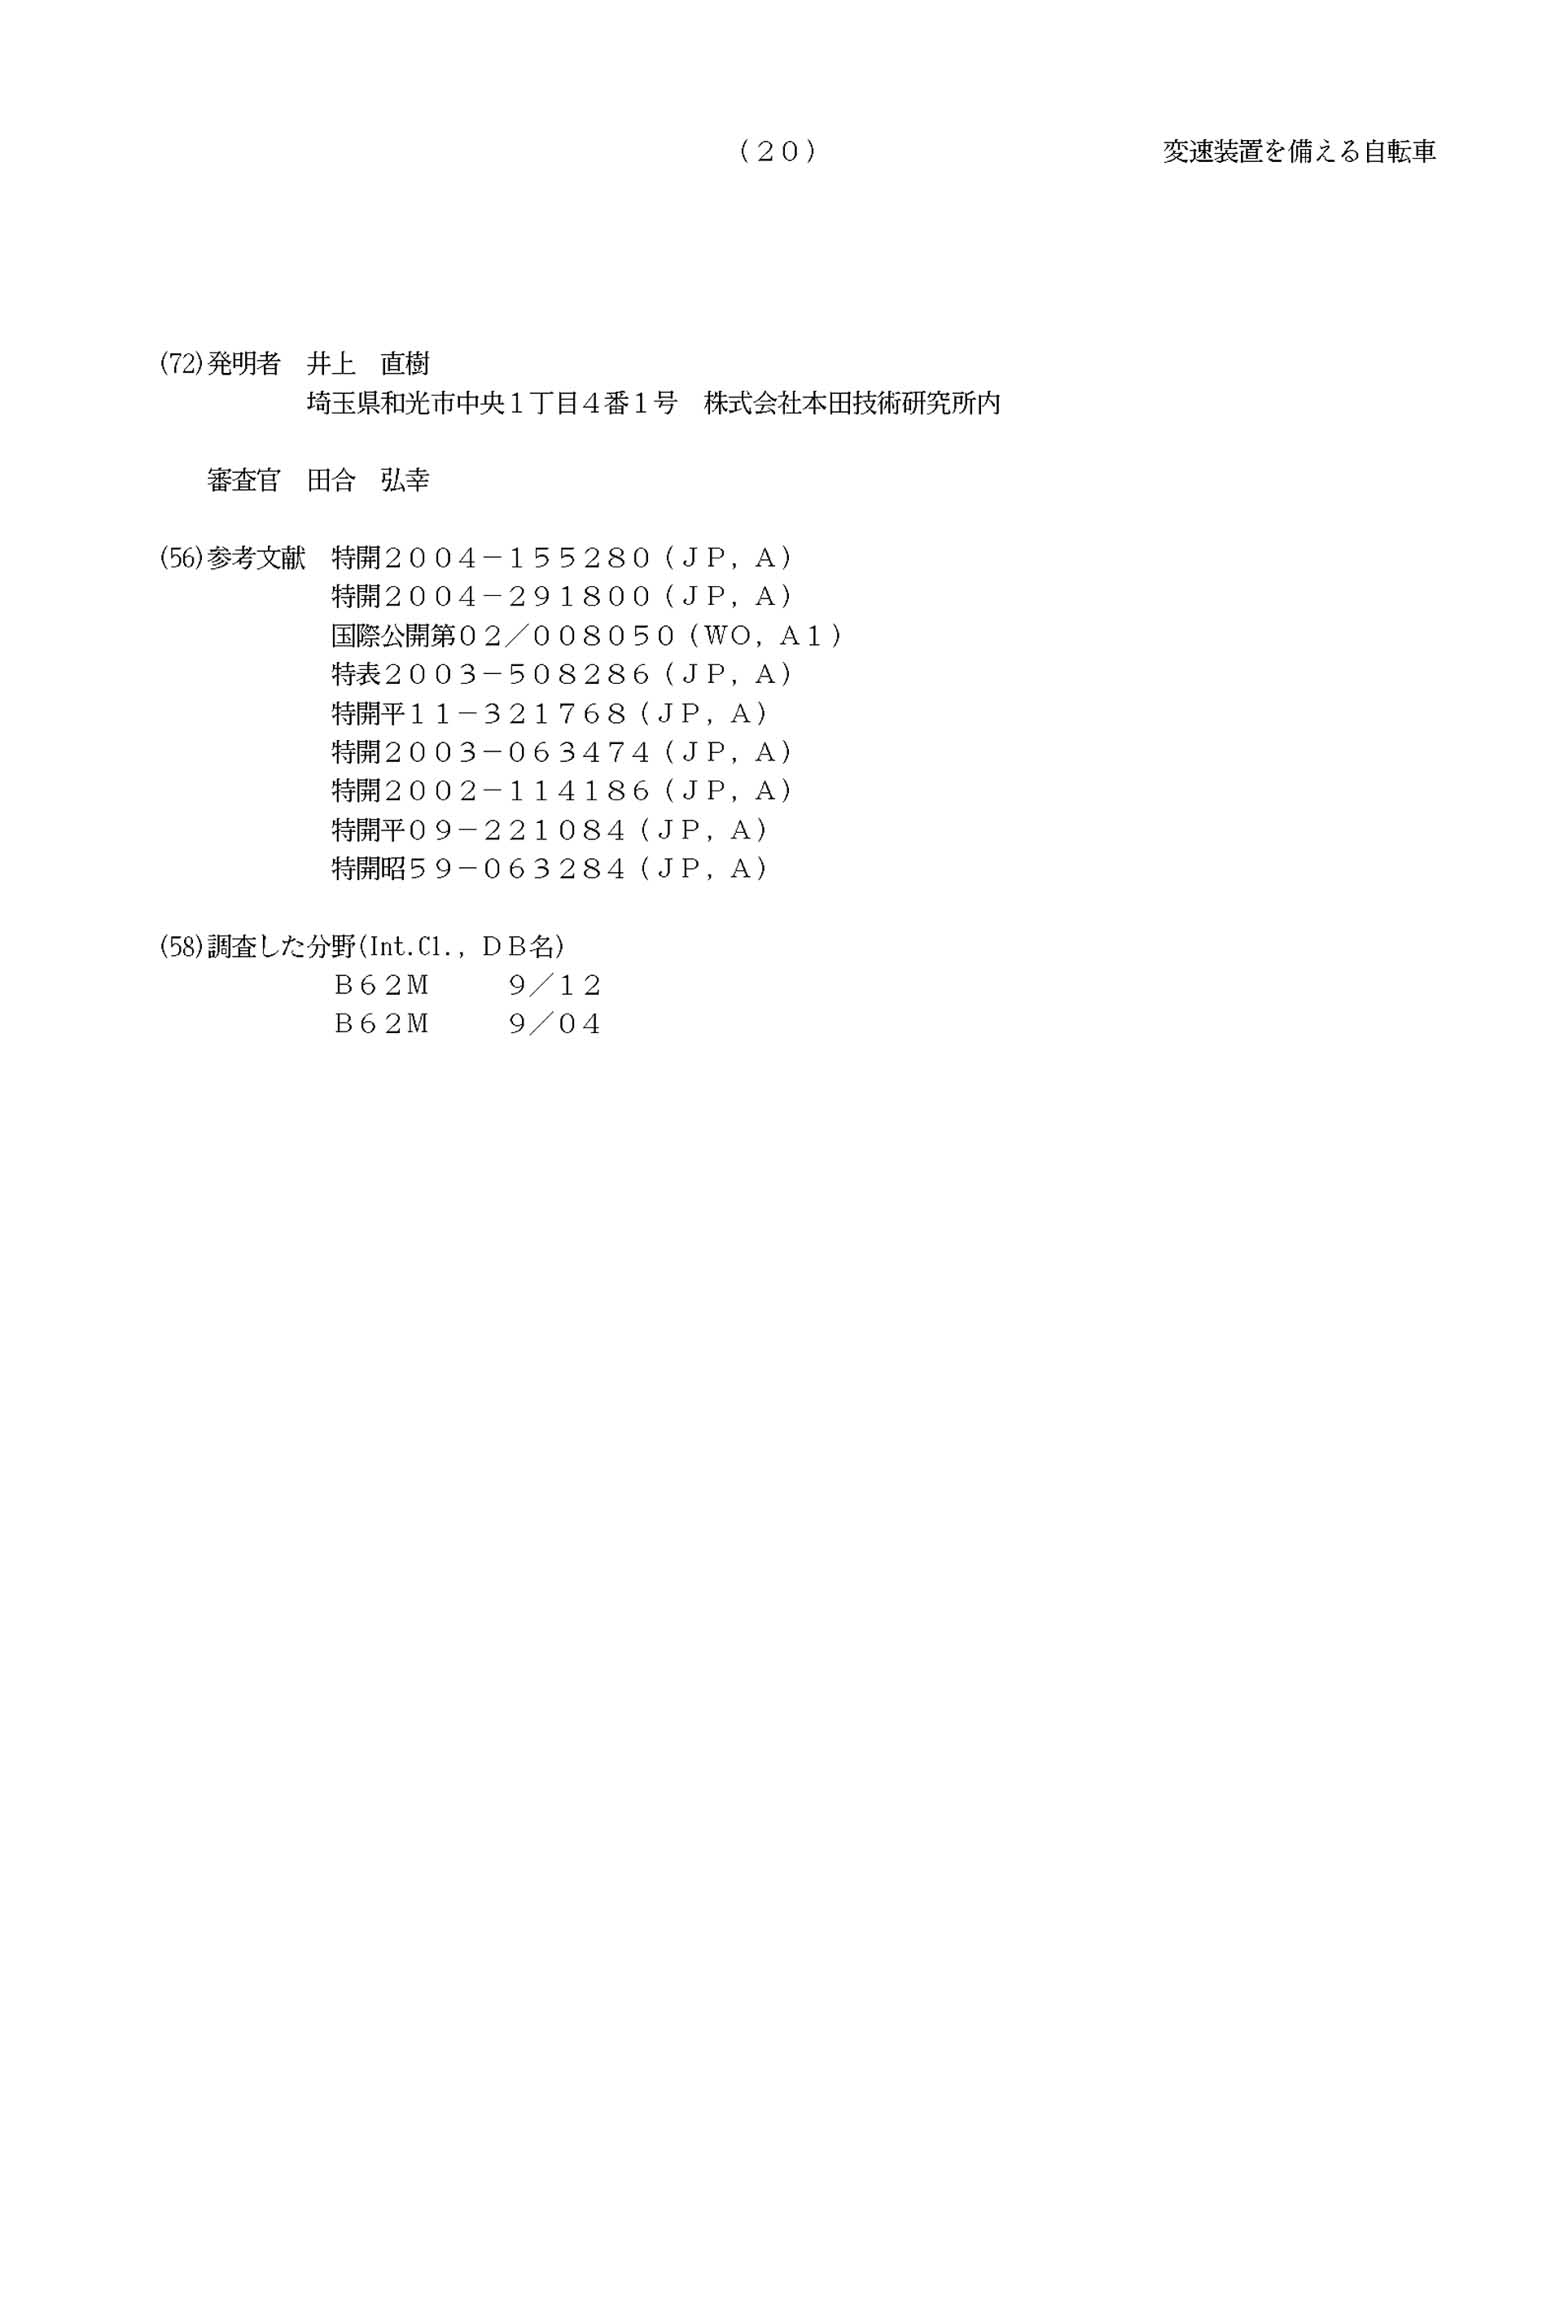 Japanese Patent 4260068 - Honda page 20 main image